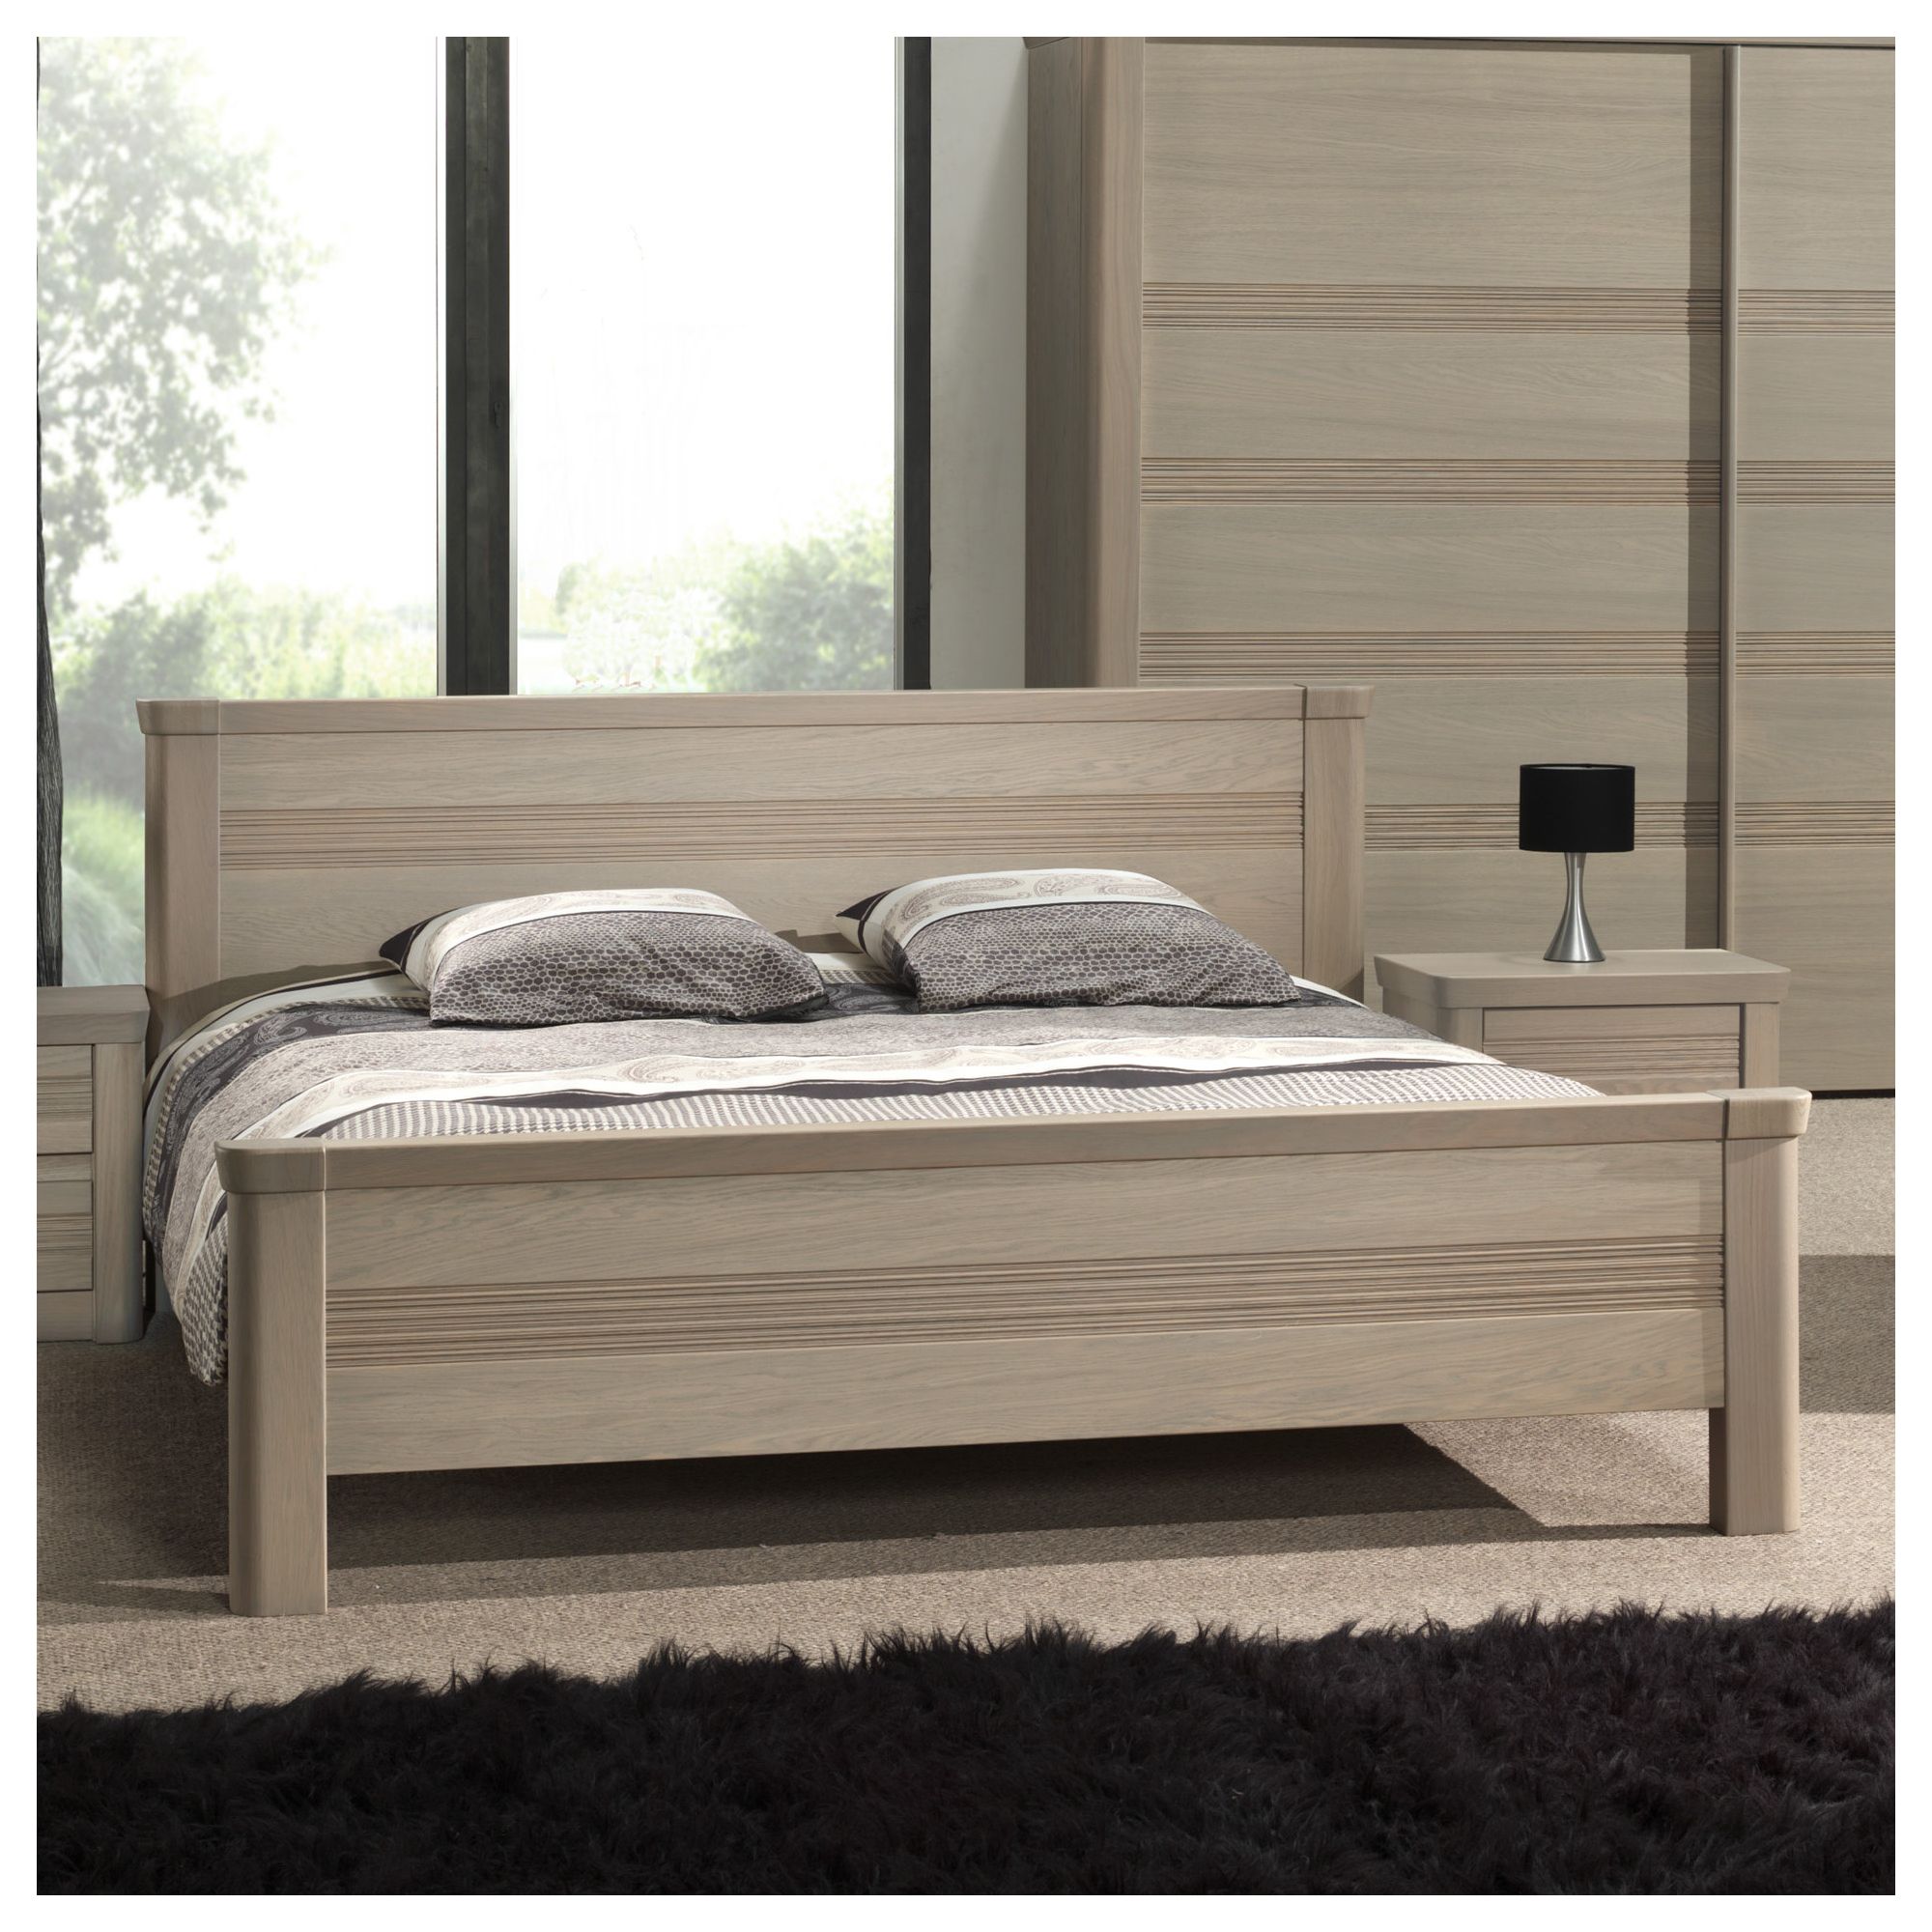 Sleepline Mundo Bed - Grey Mat Lacquered - King at Tesco Direct